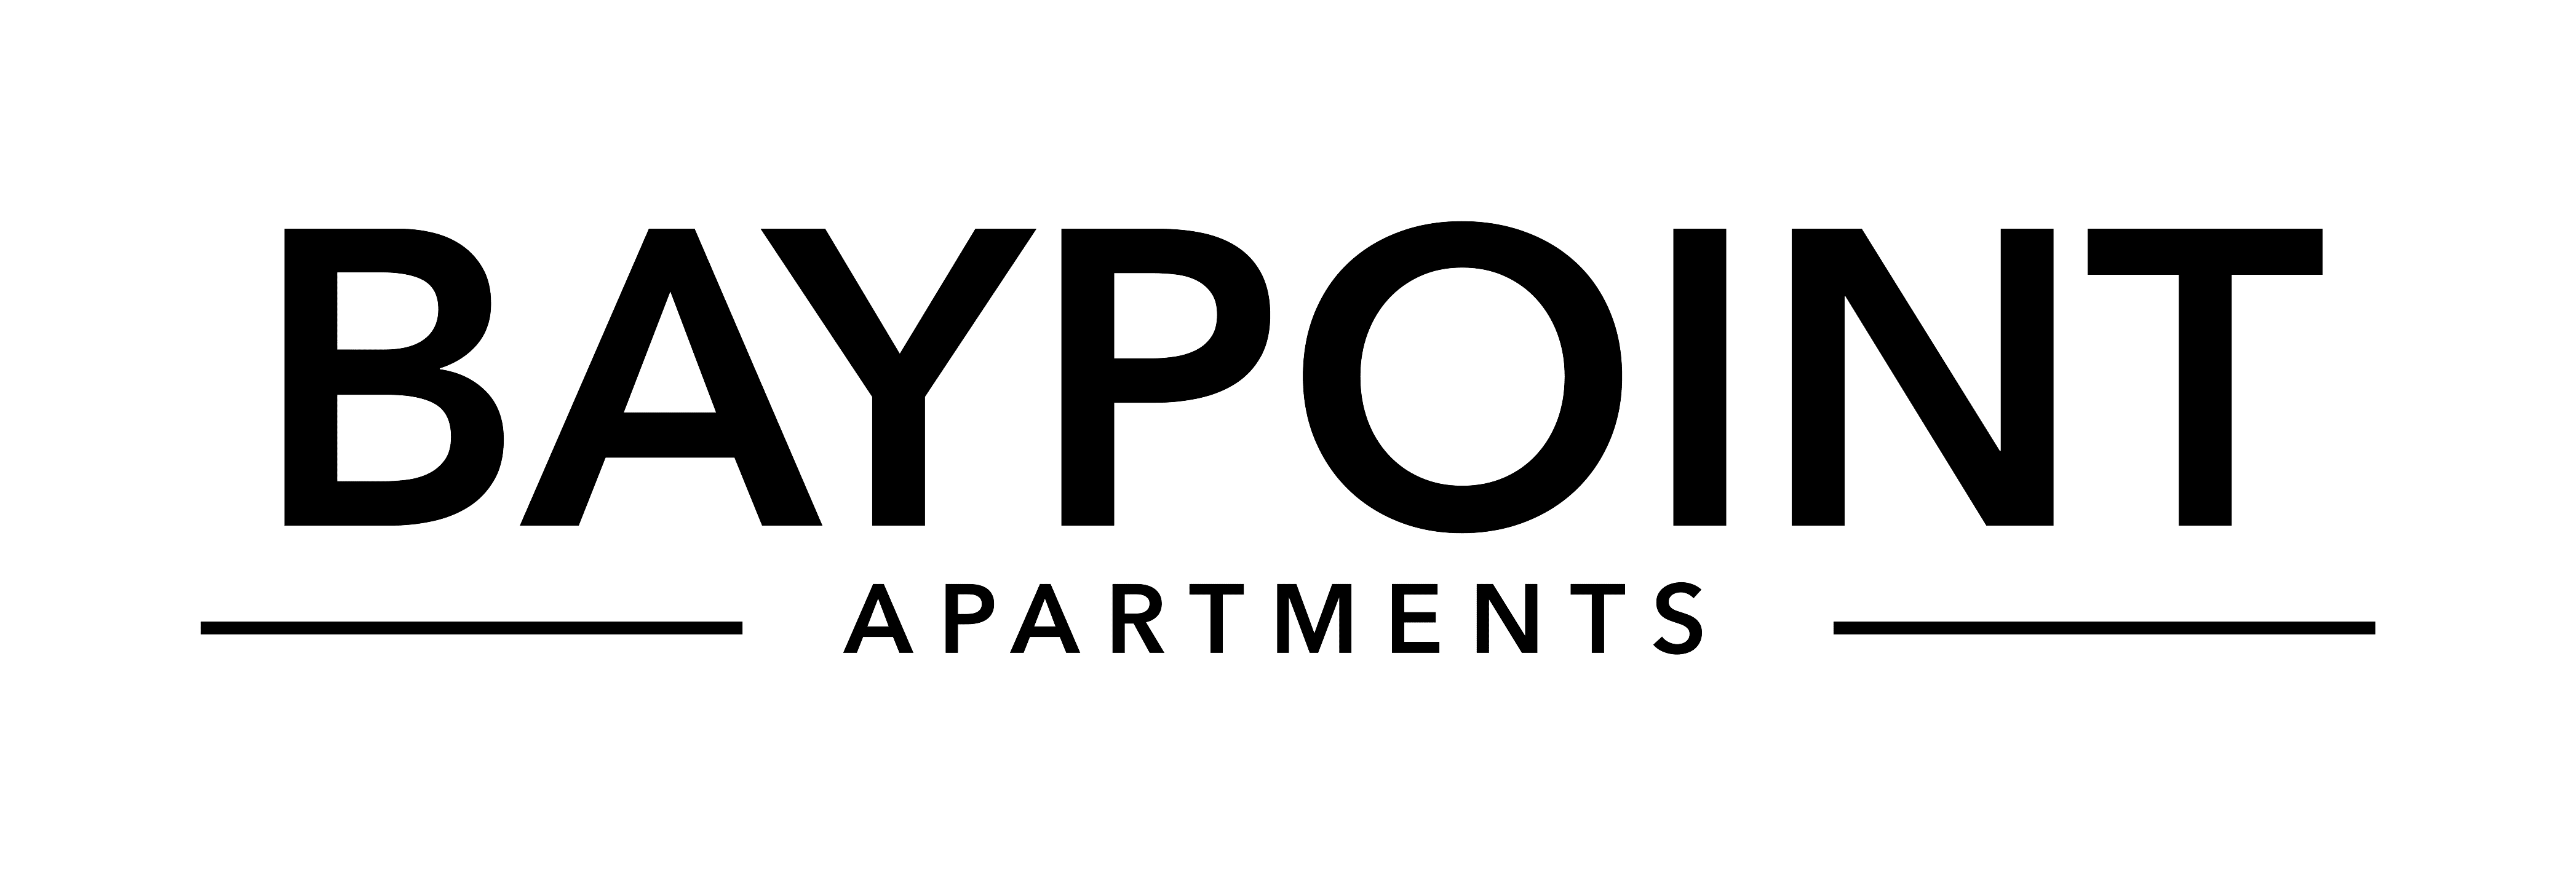 Baypoint Apartments